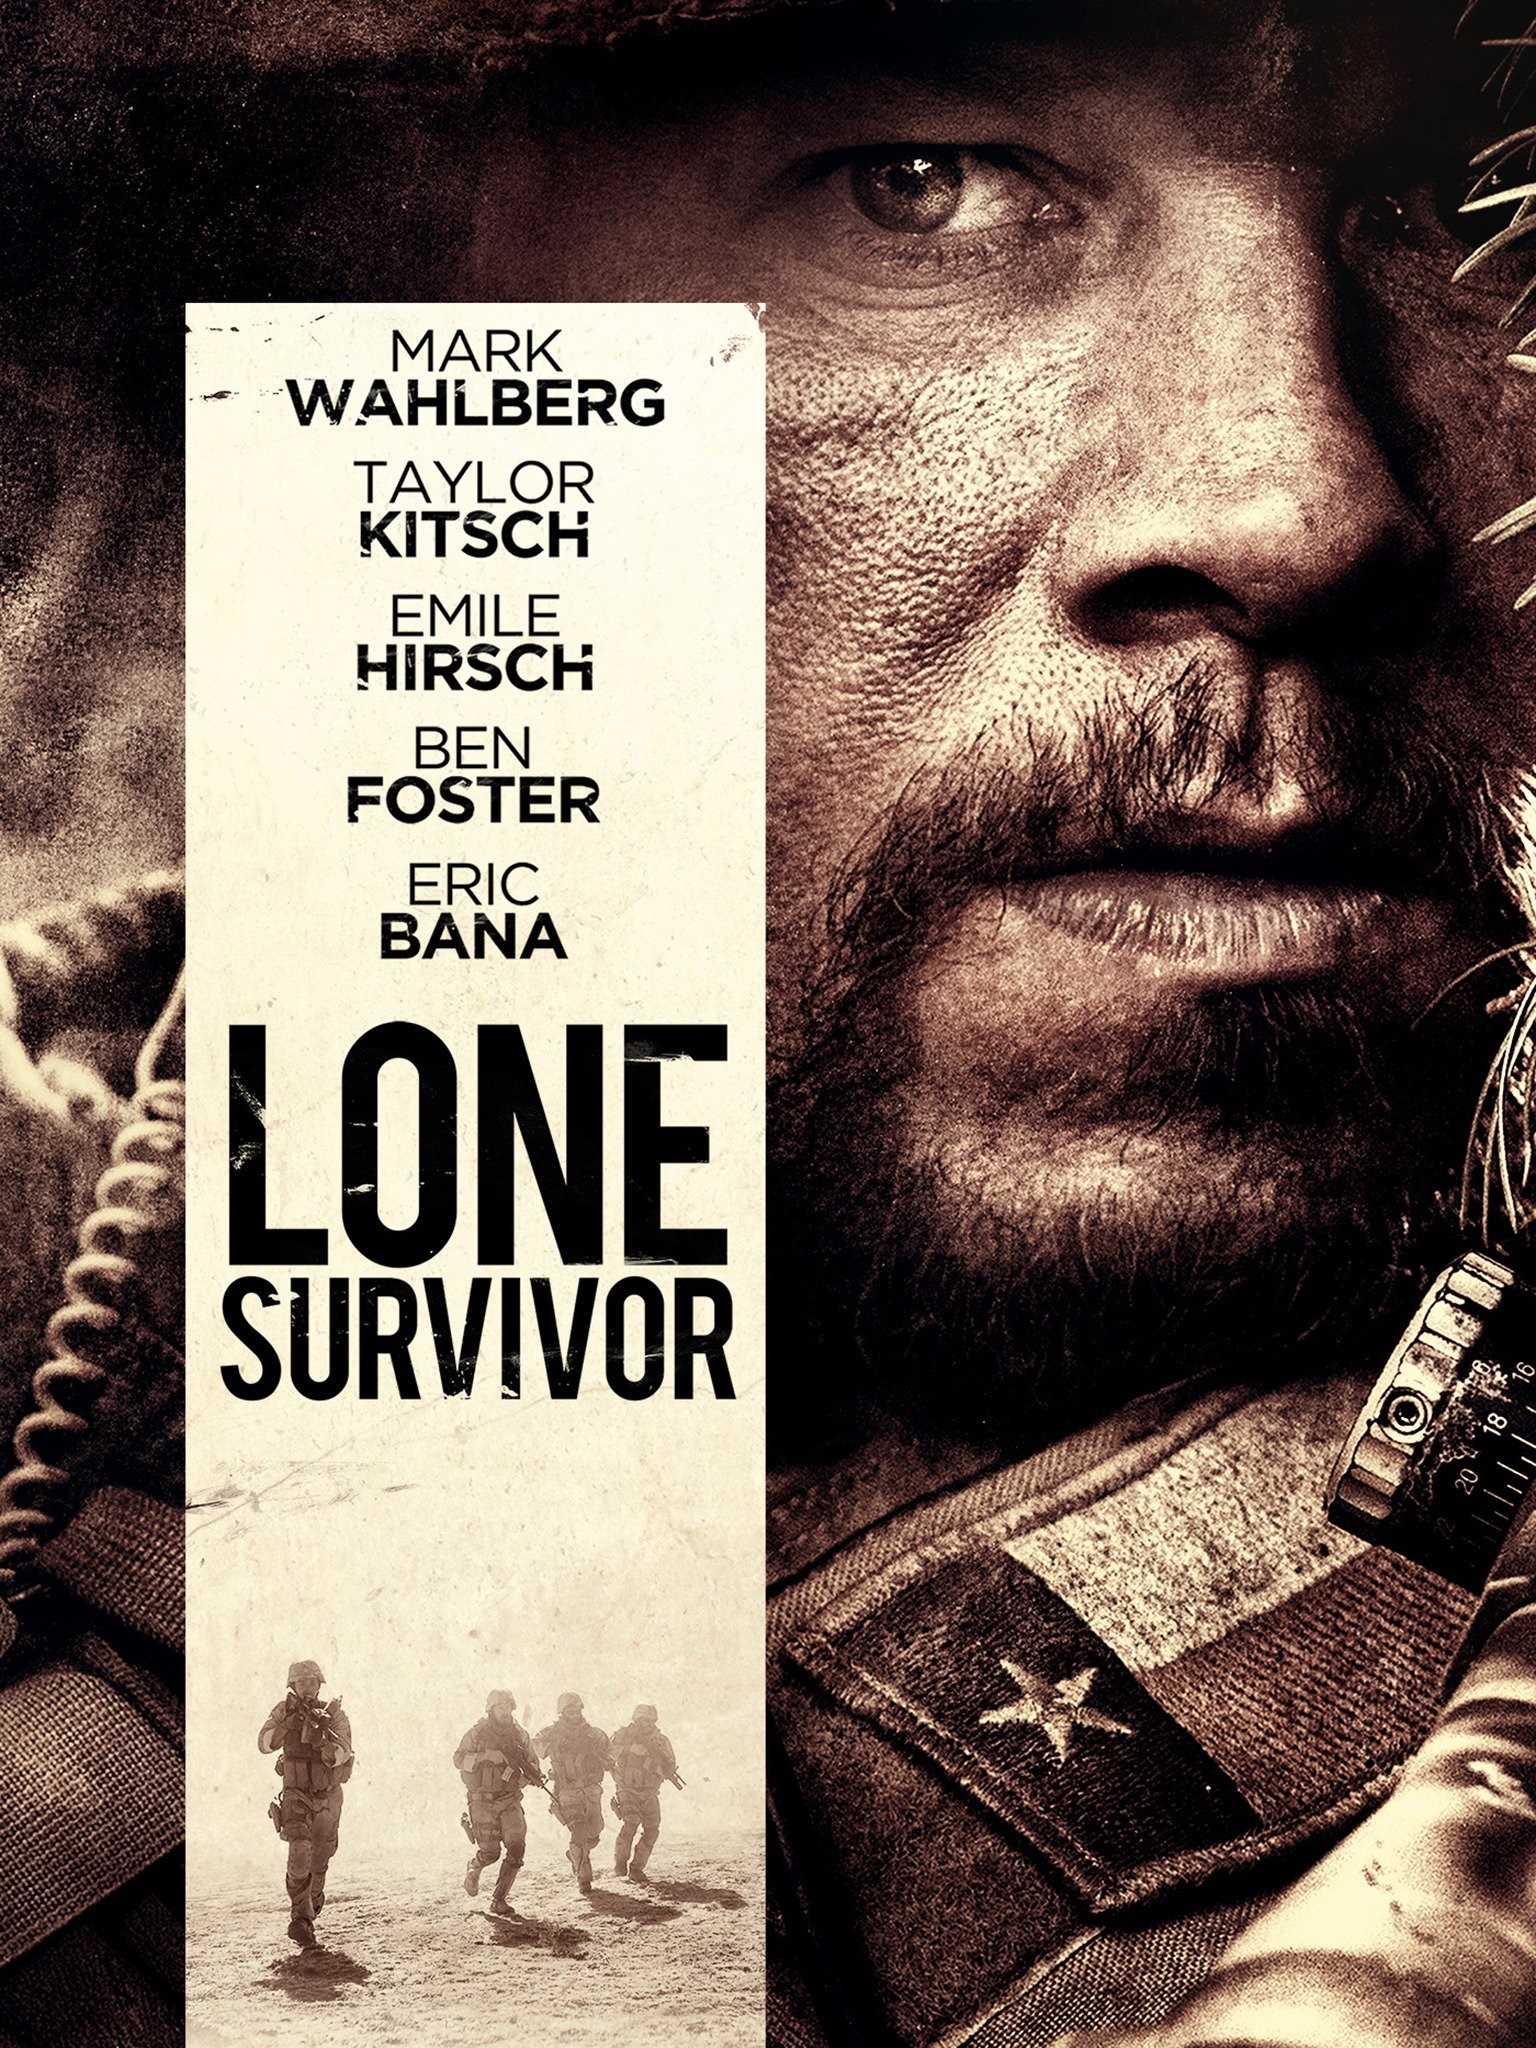 Who Survives “Lone Survivor,” Wahlberg or Kitsch?